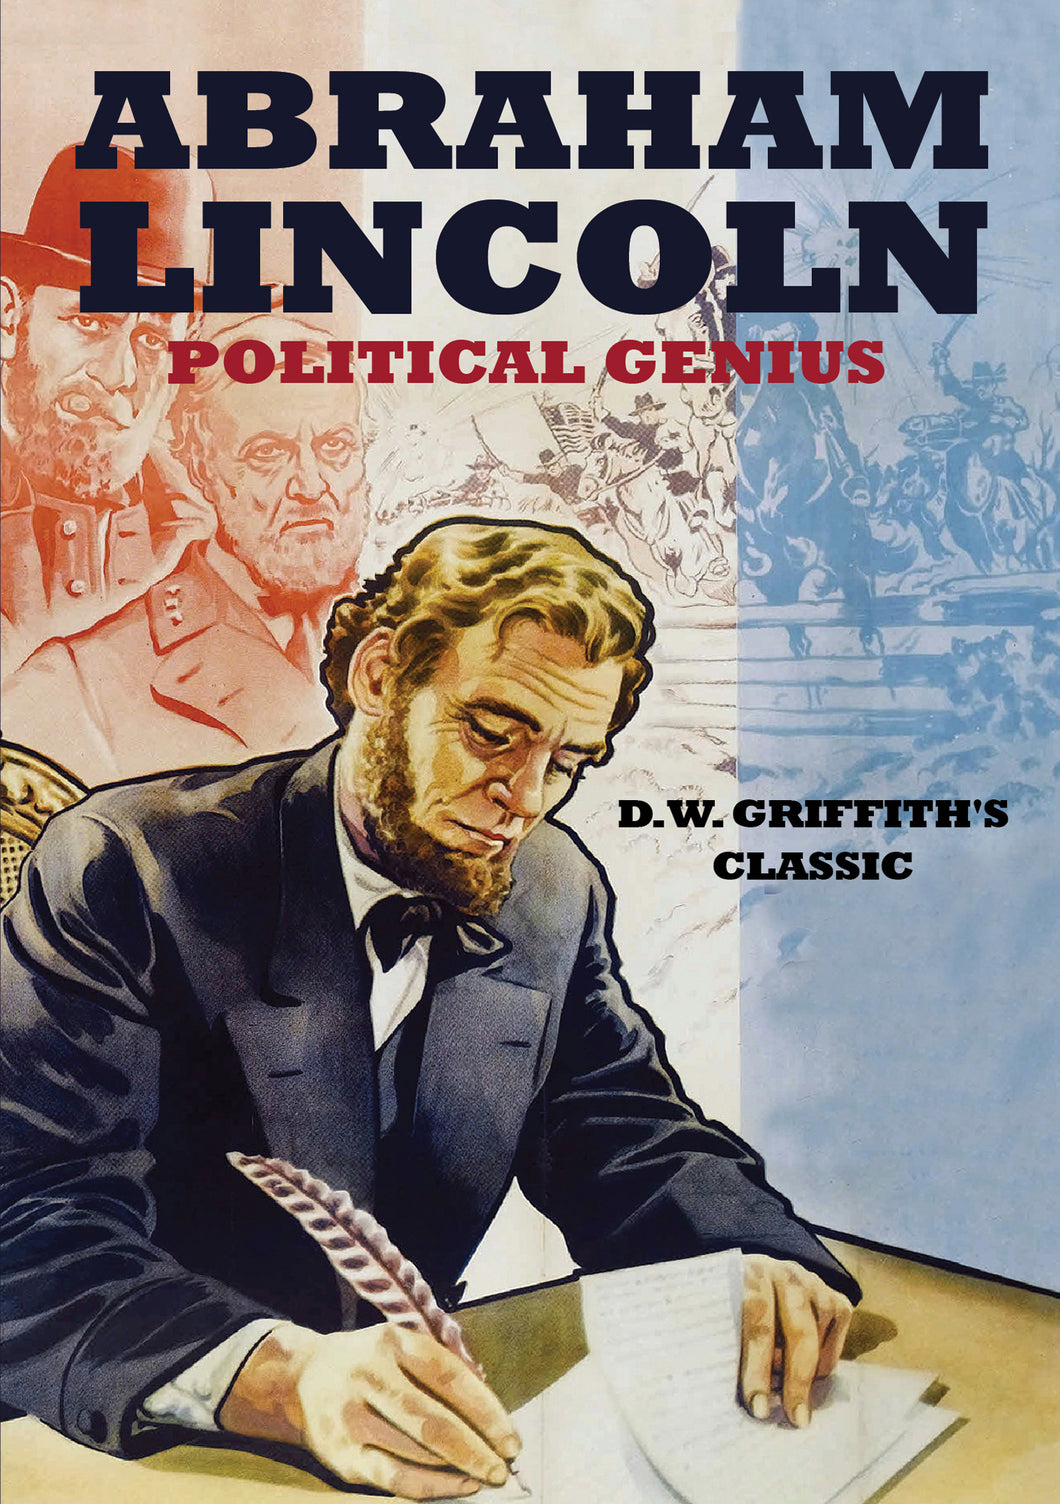 Abraham Lincoln (DVD)